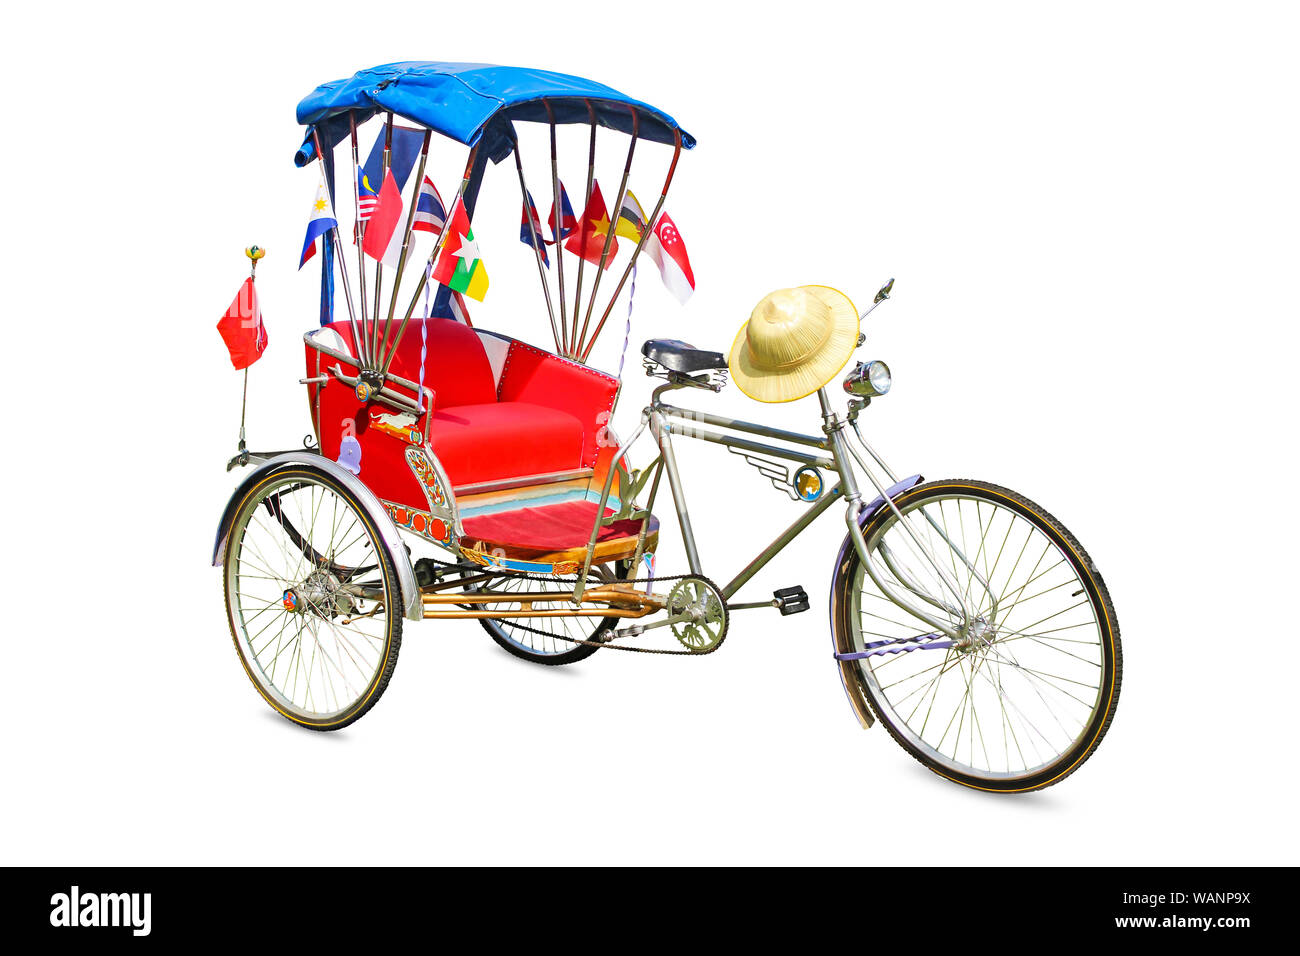 Bicicleta taxi Imágenes recortadas de stock - Alamy